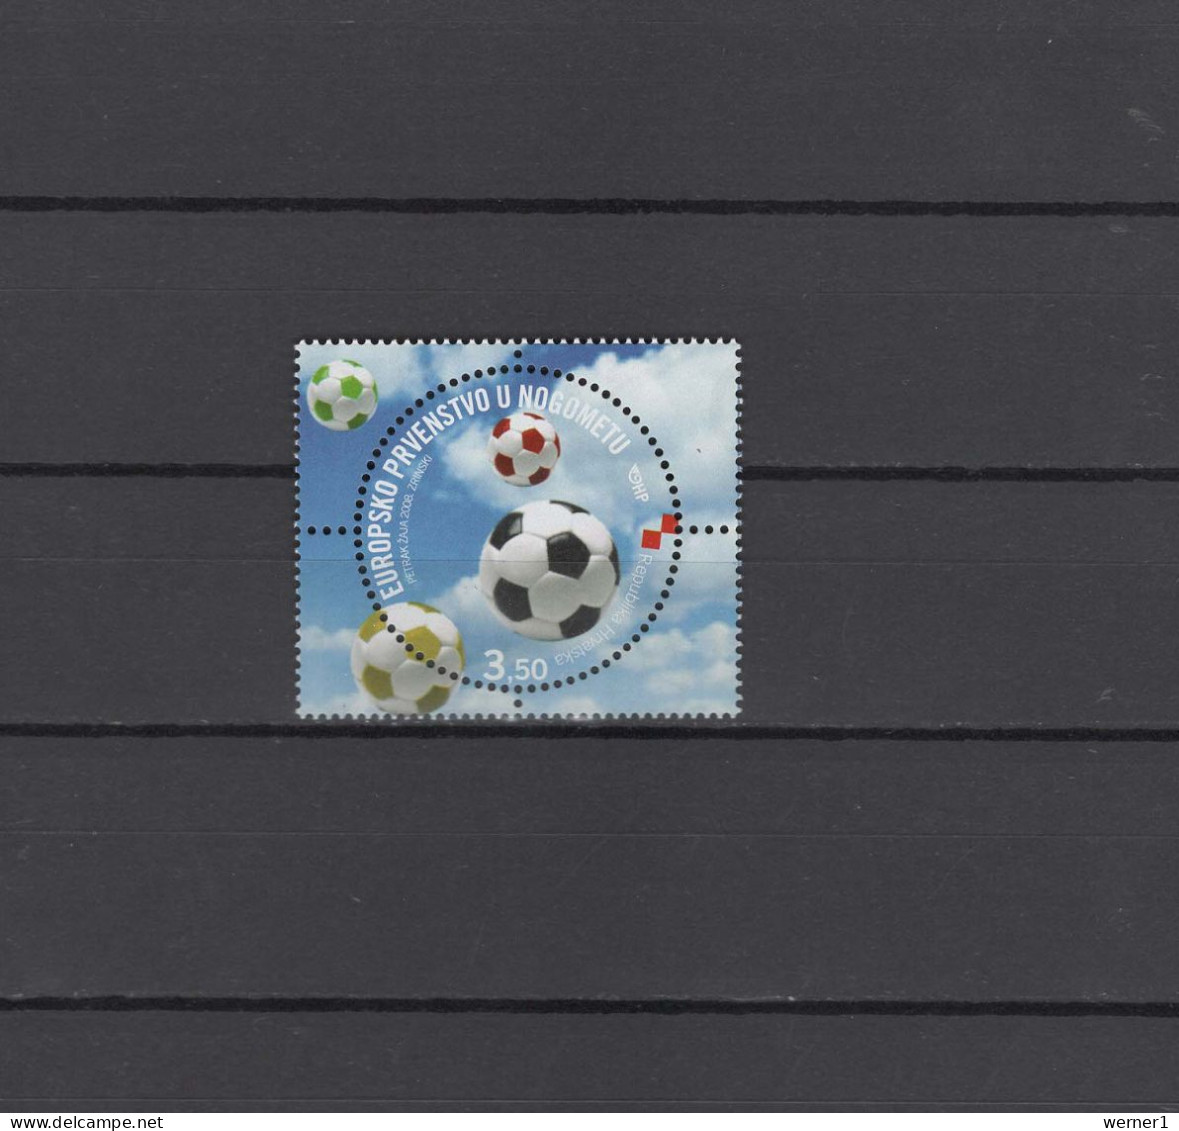 Croatia 2008 Football Soccer European Championship Stamp MNH - Europees Kampioenschap (UEFA)